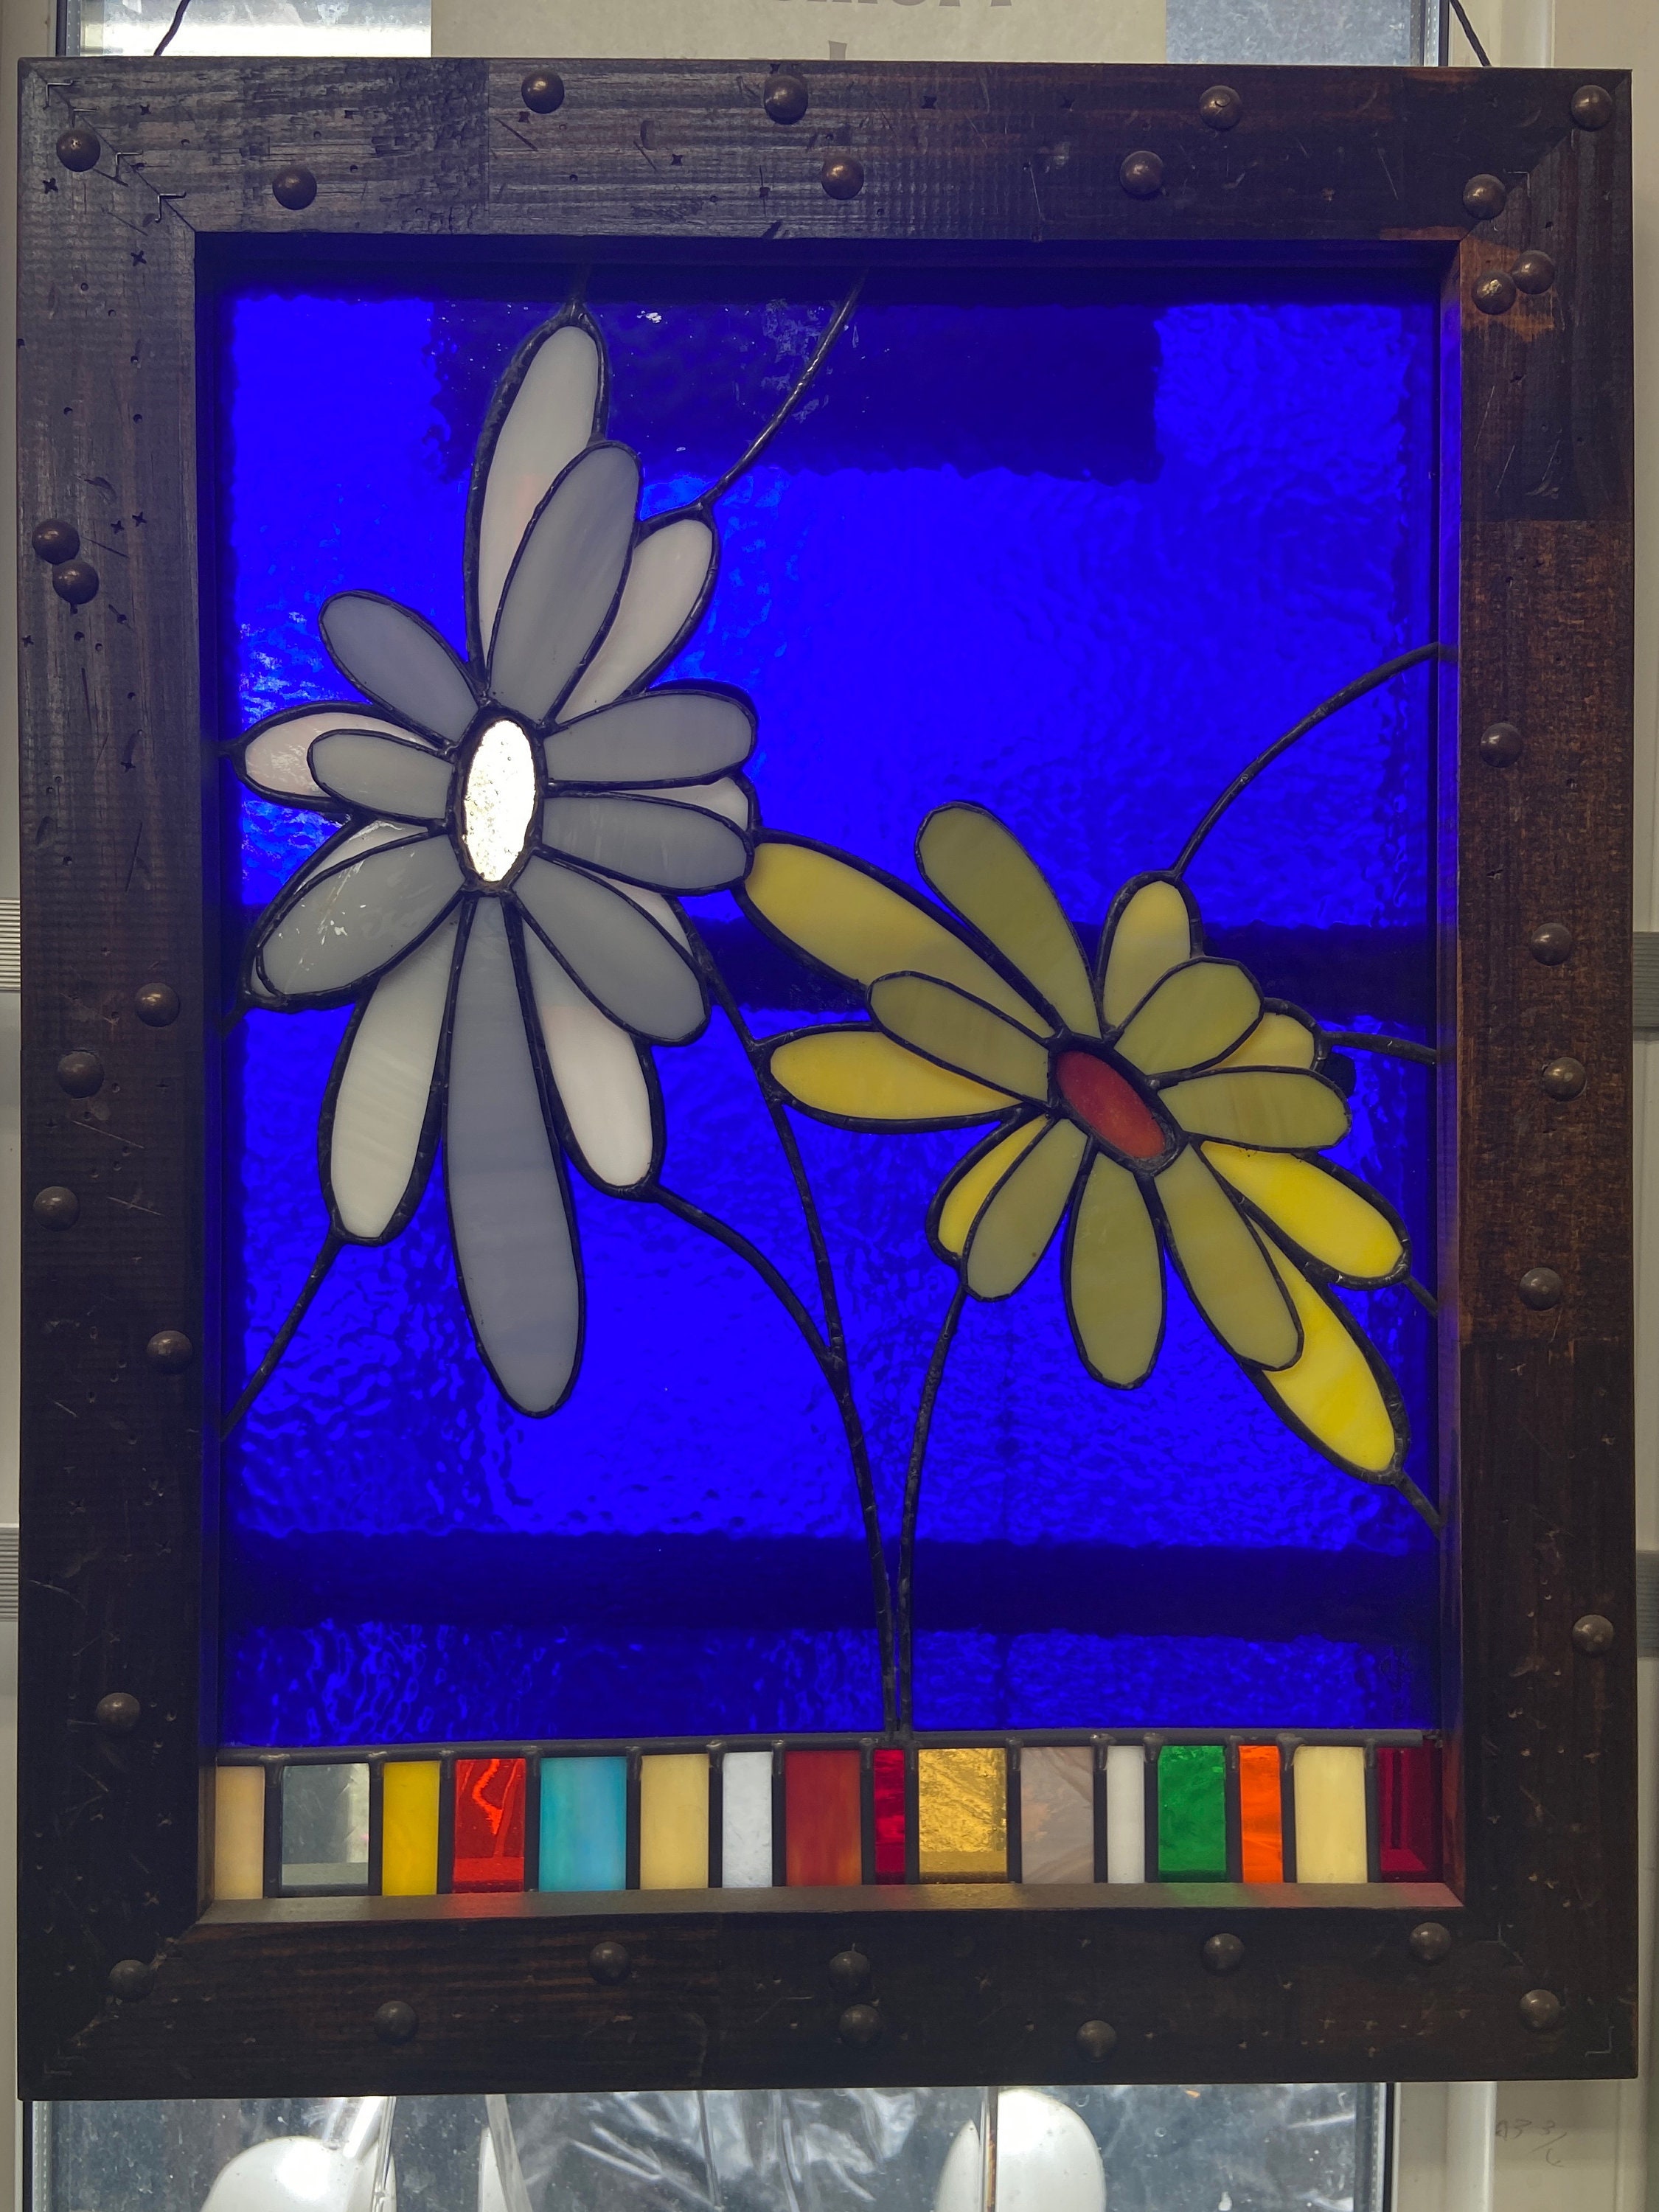 Roquebrun Tiffany Style Stained Glass Window - TF810 - Design Toscano